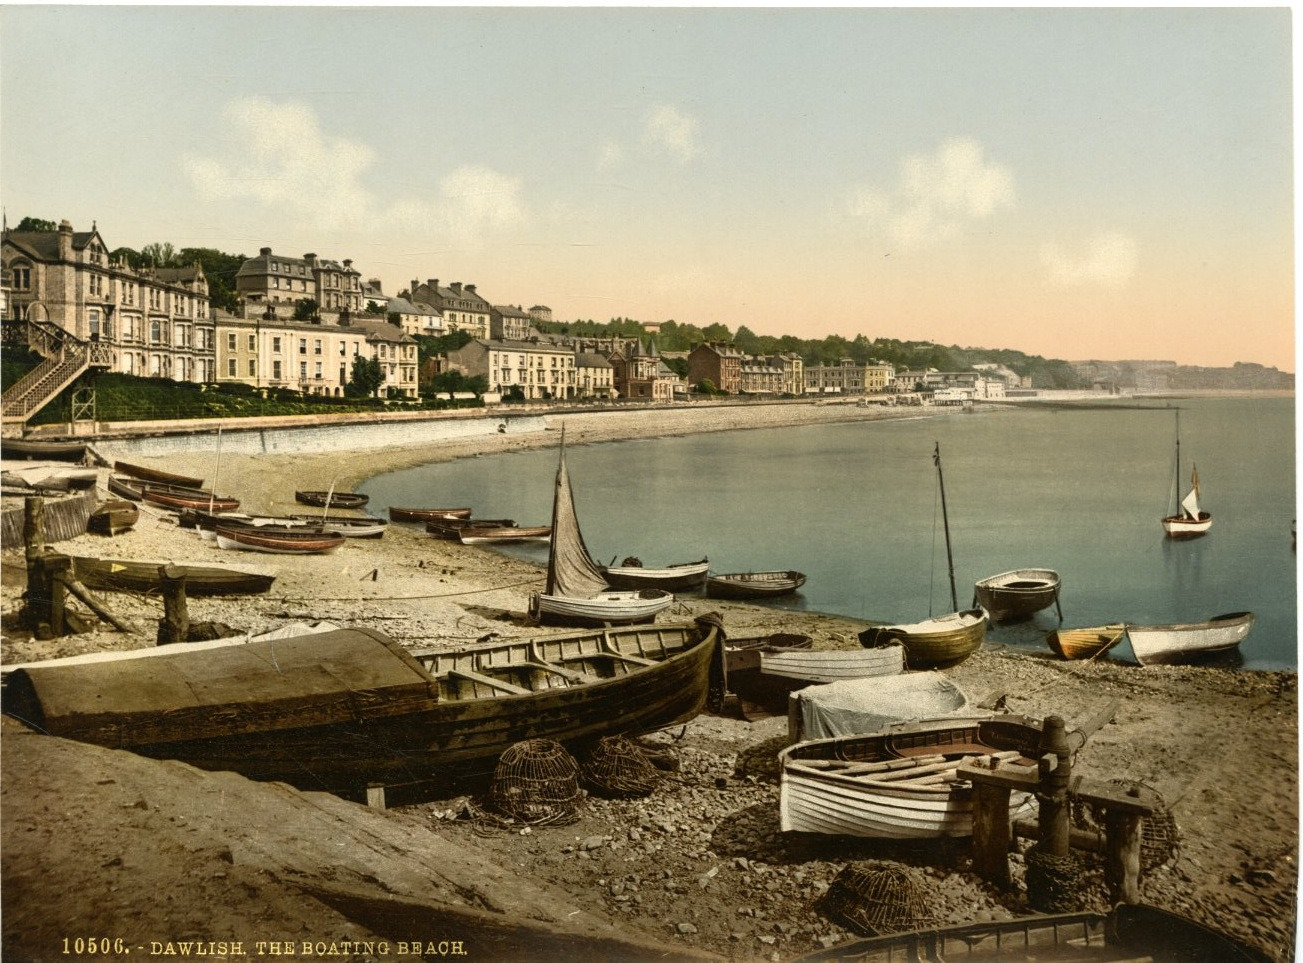 P.Z. England, Dawlish, The Boating Beach Vintage Photochrome, England Photo